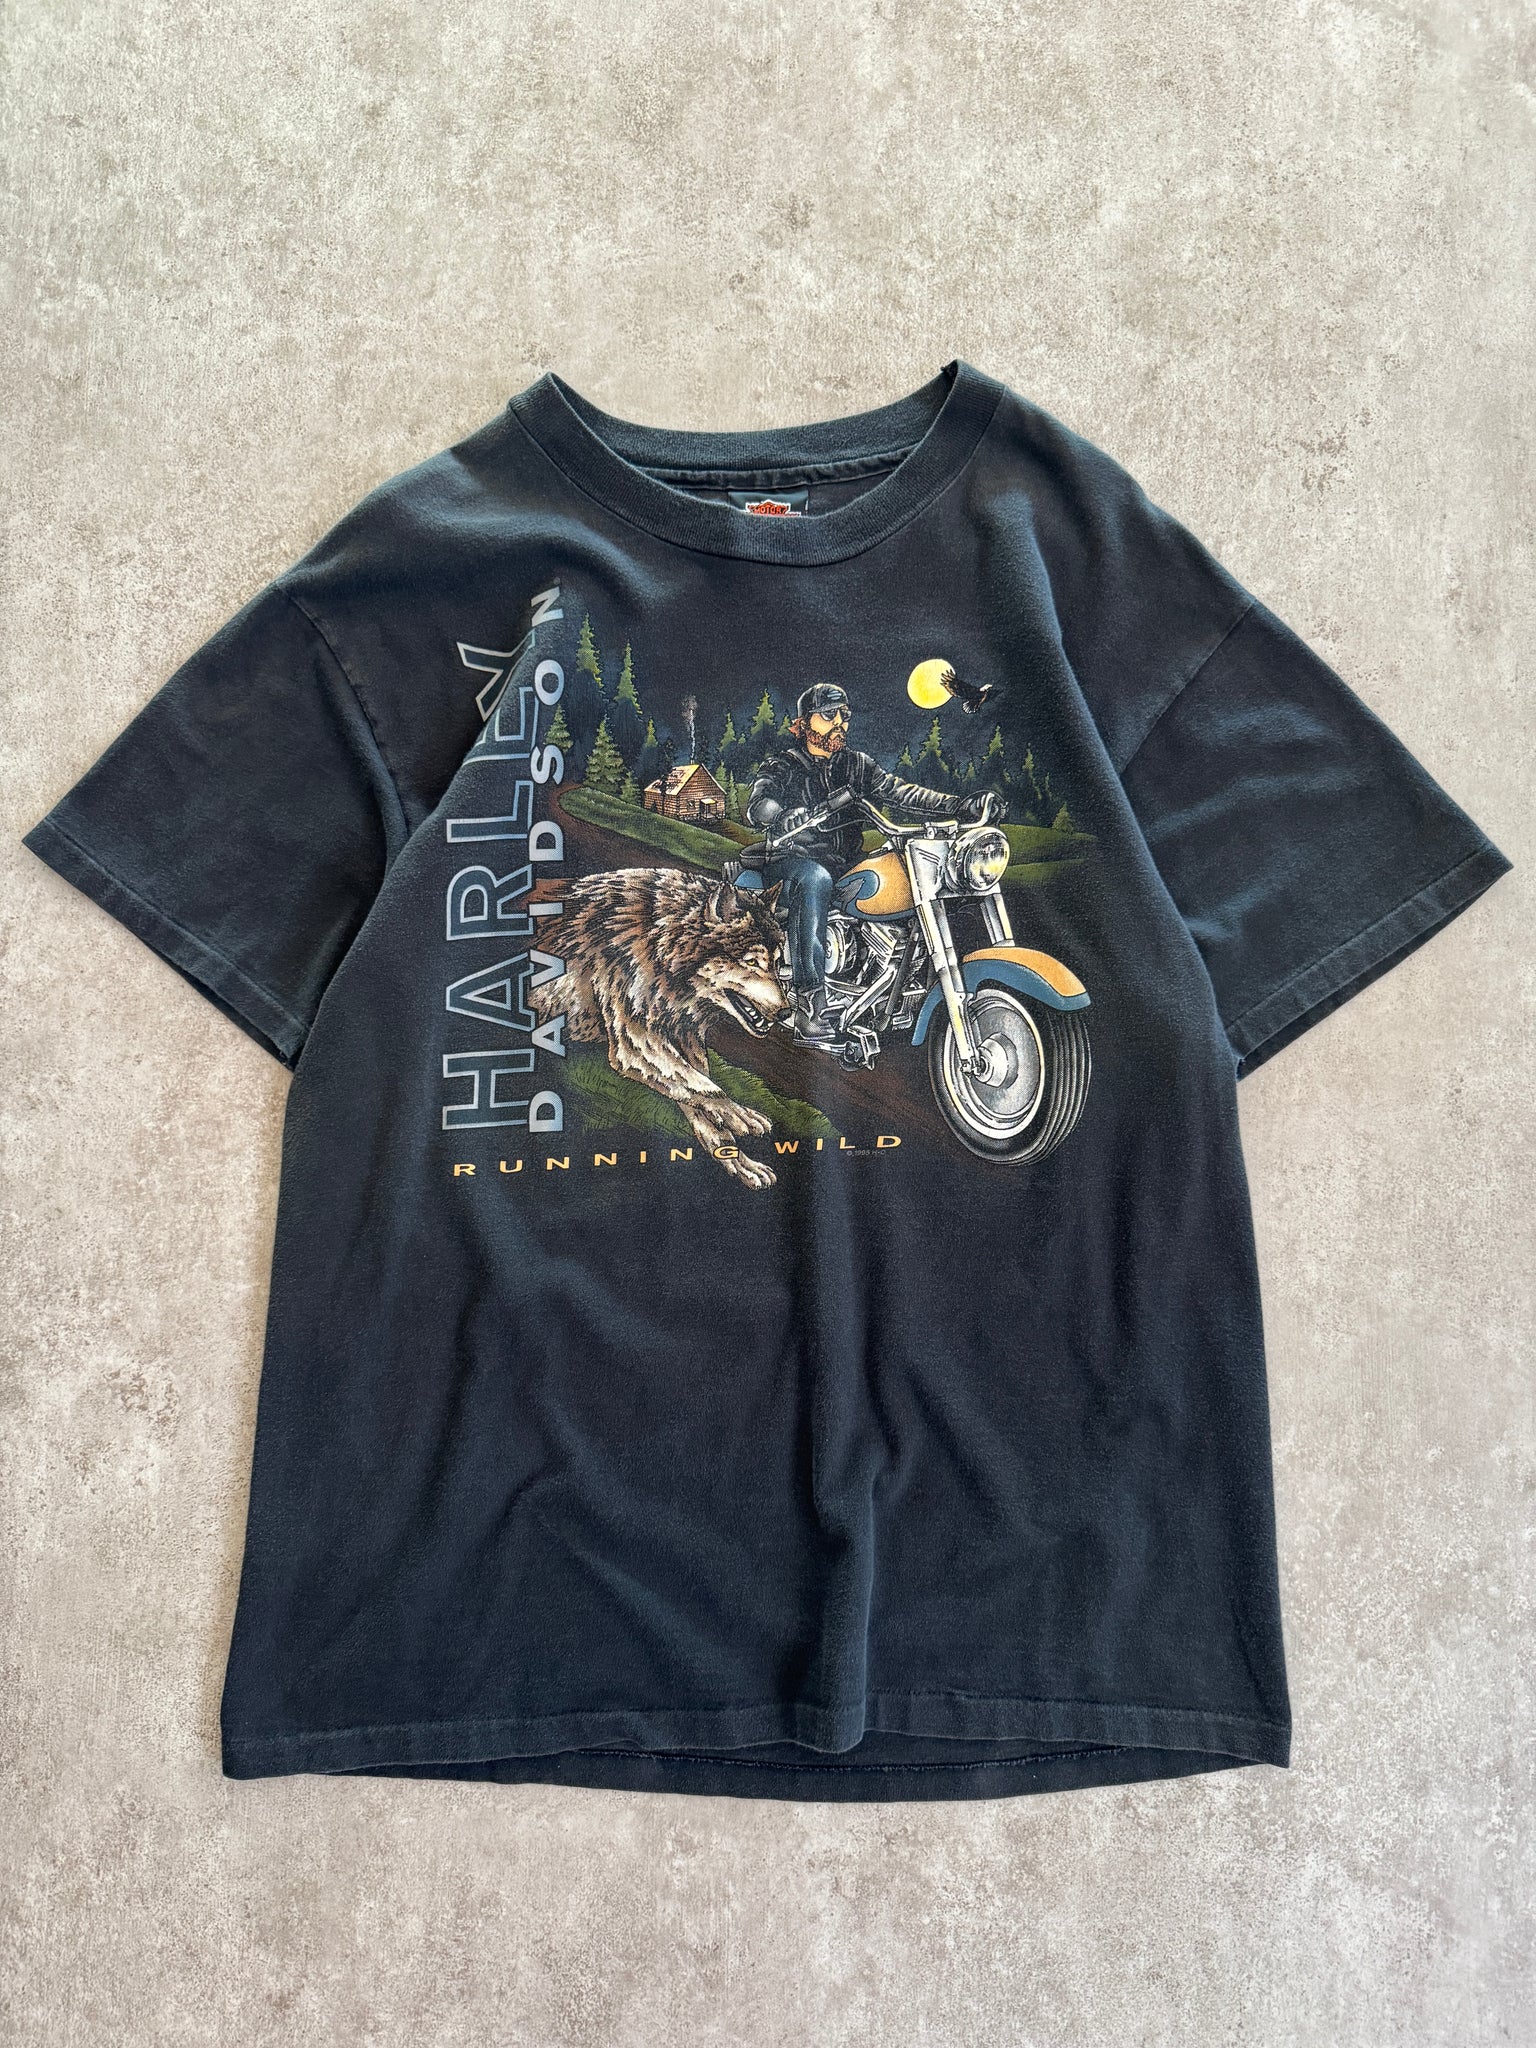 Vintage Harley Davidson Running Wild T'Shirt (L)